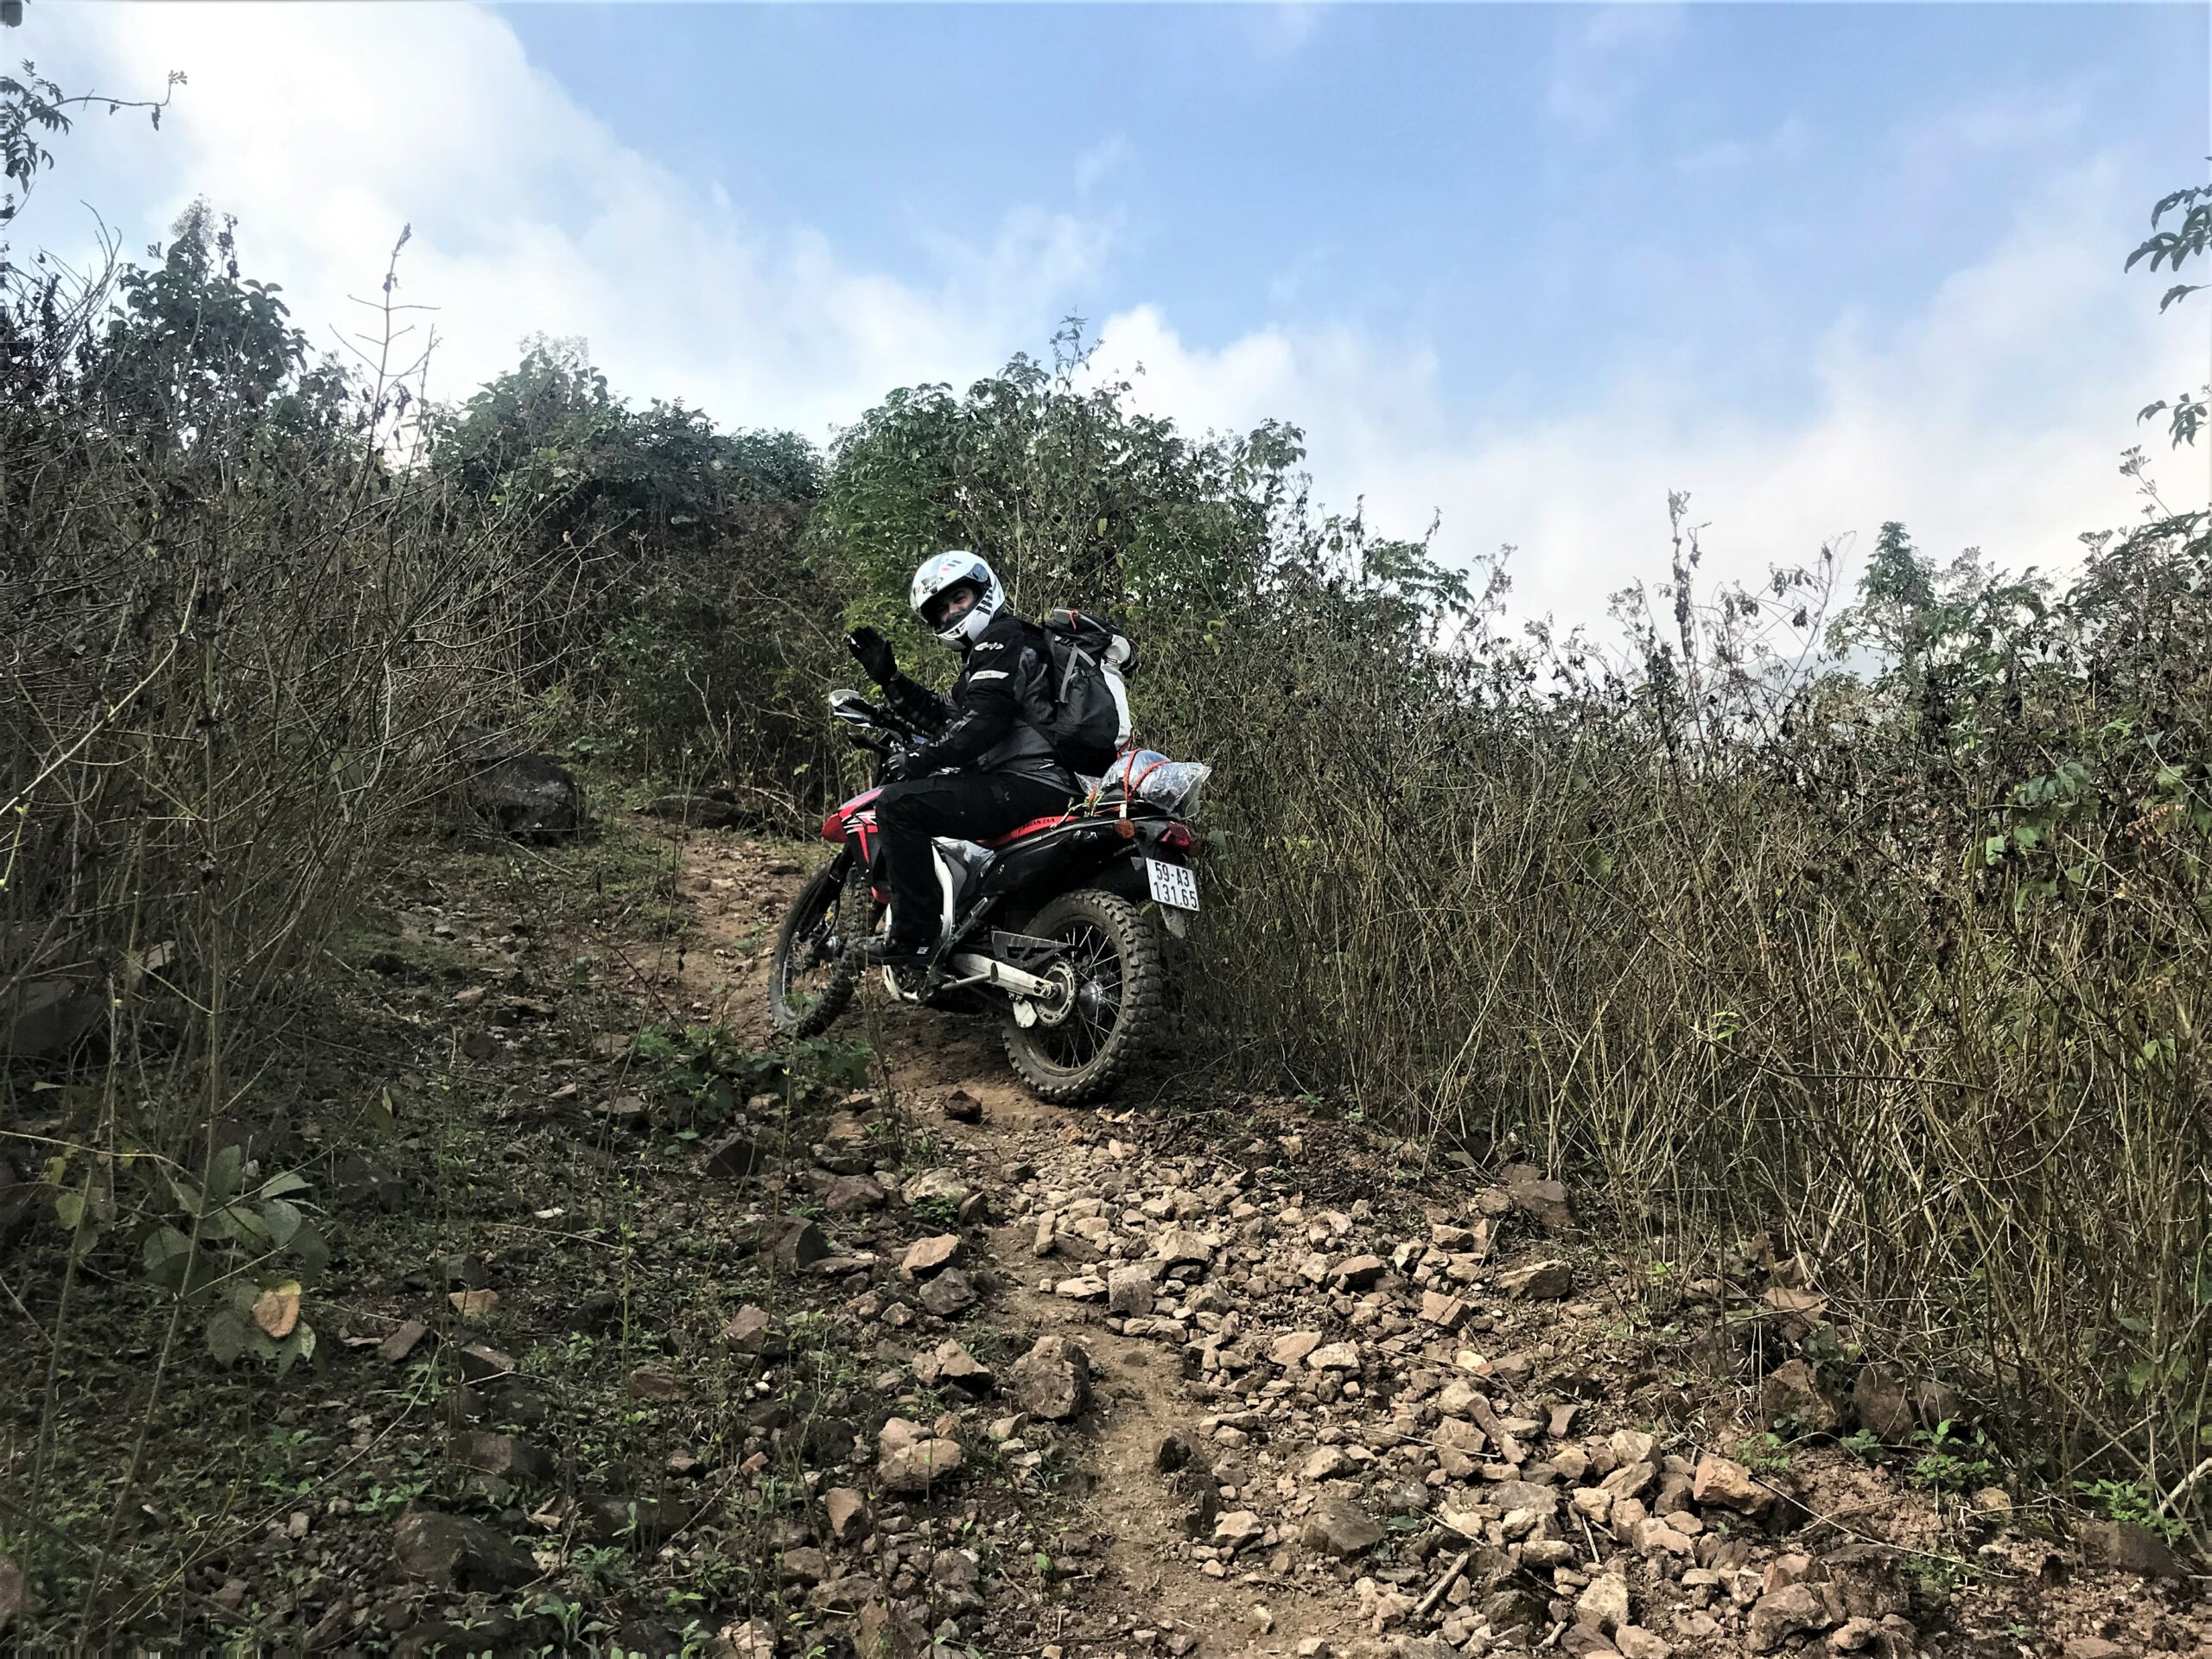 adv rider riding on rocky road on northwest loop vietnam - best motorcycle rides in Vietnam